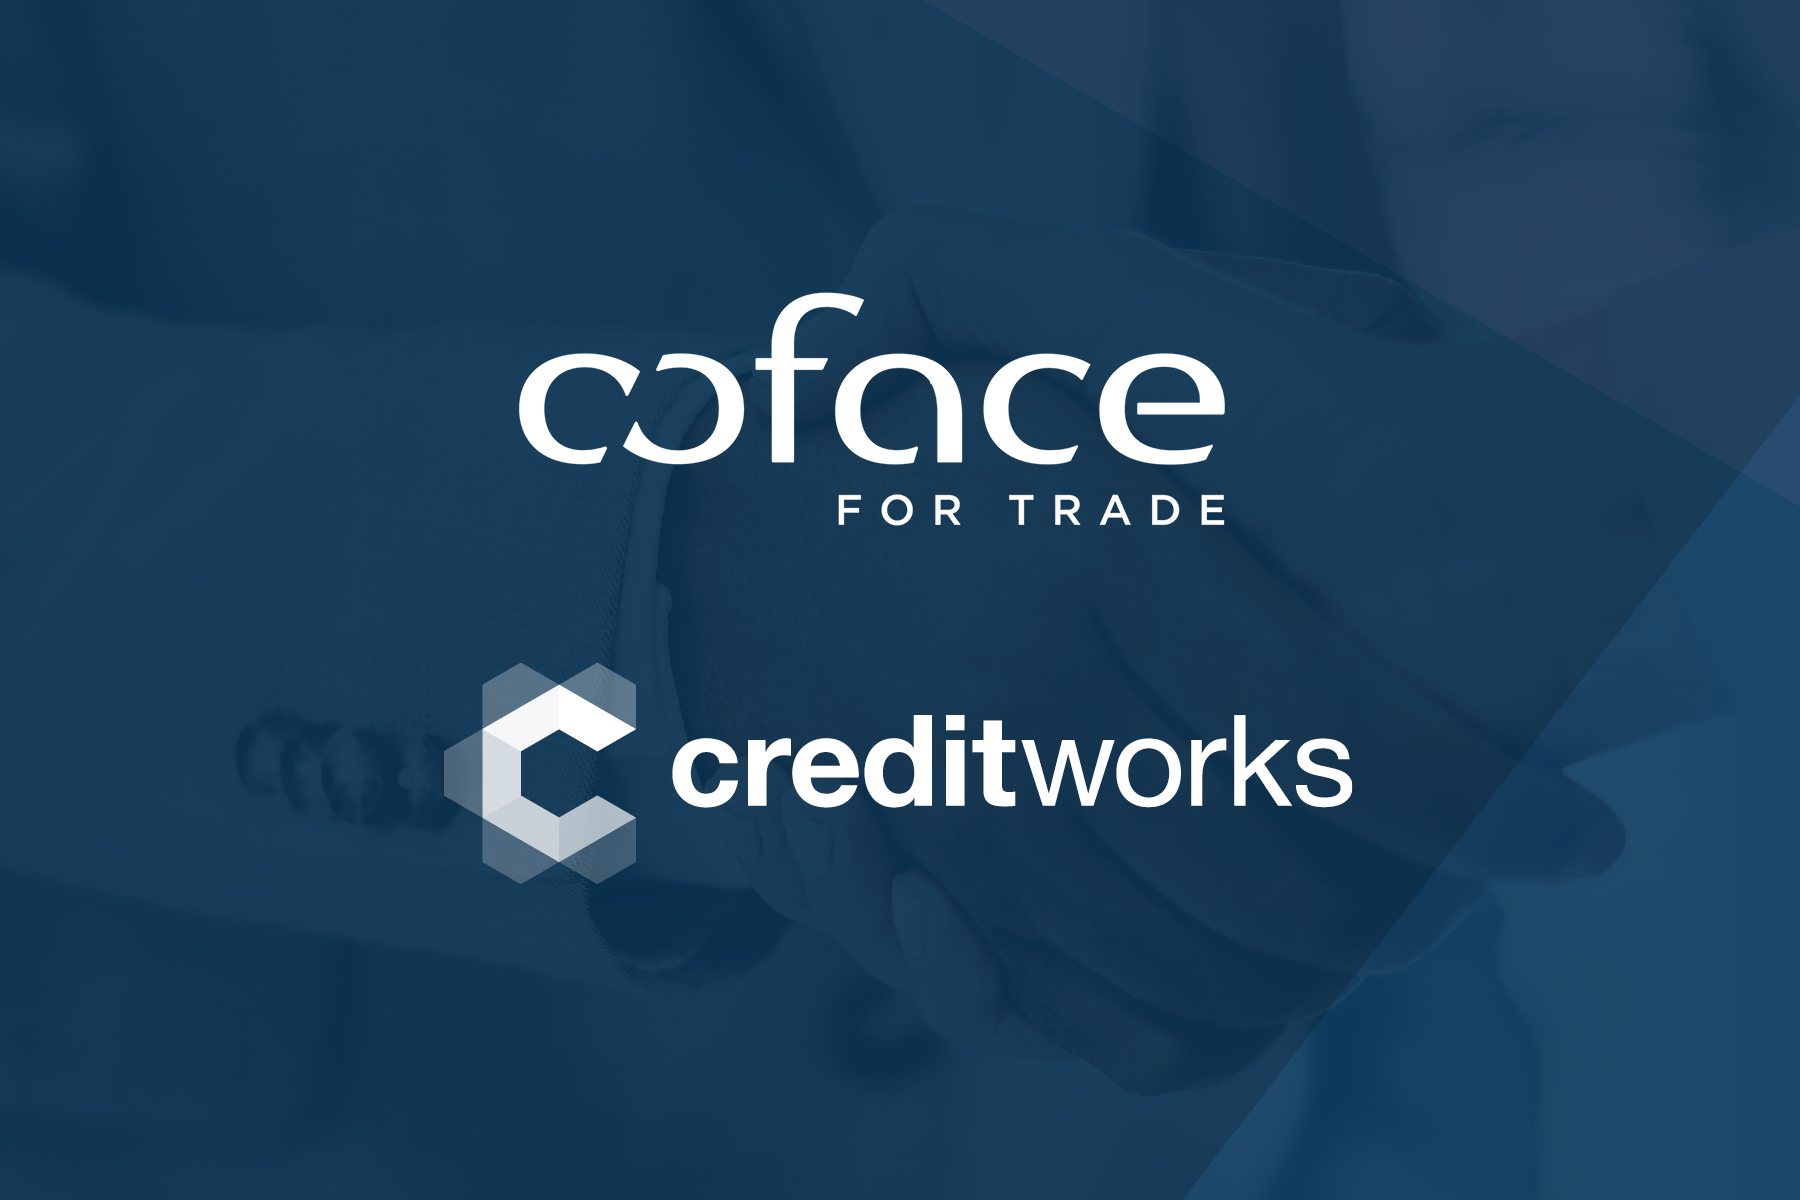 CreditWorks and Coface logos